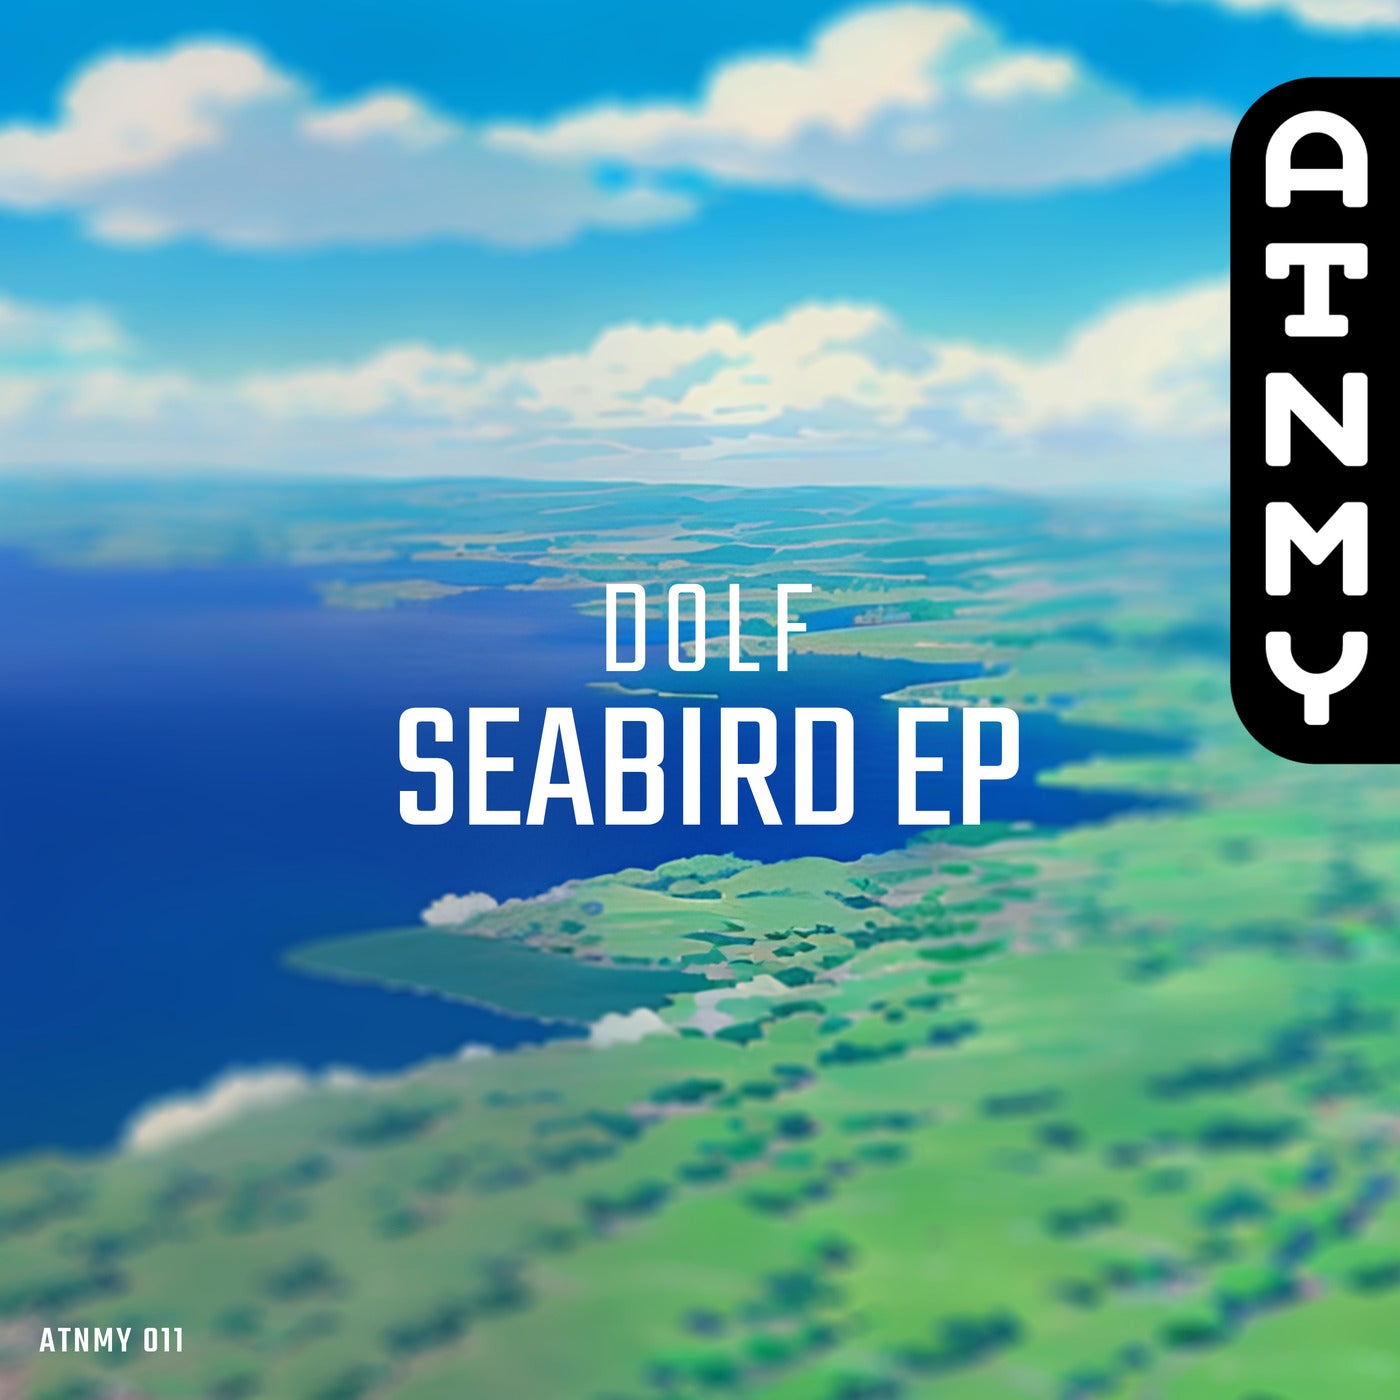 Seabird EP